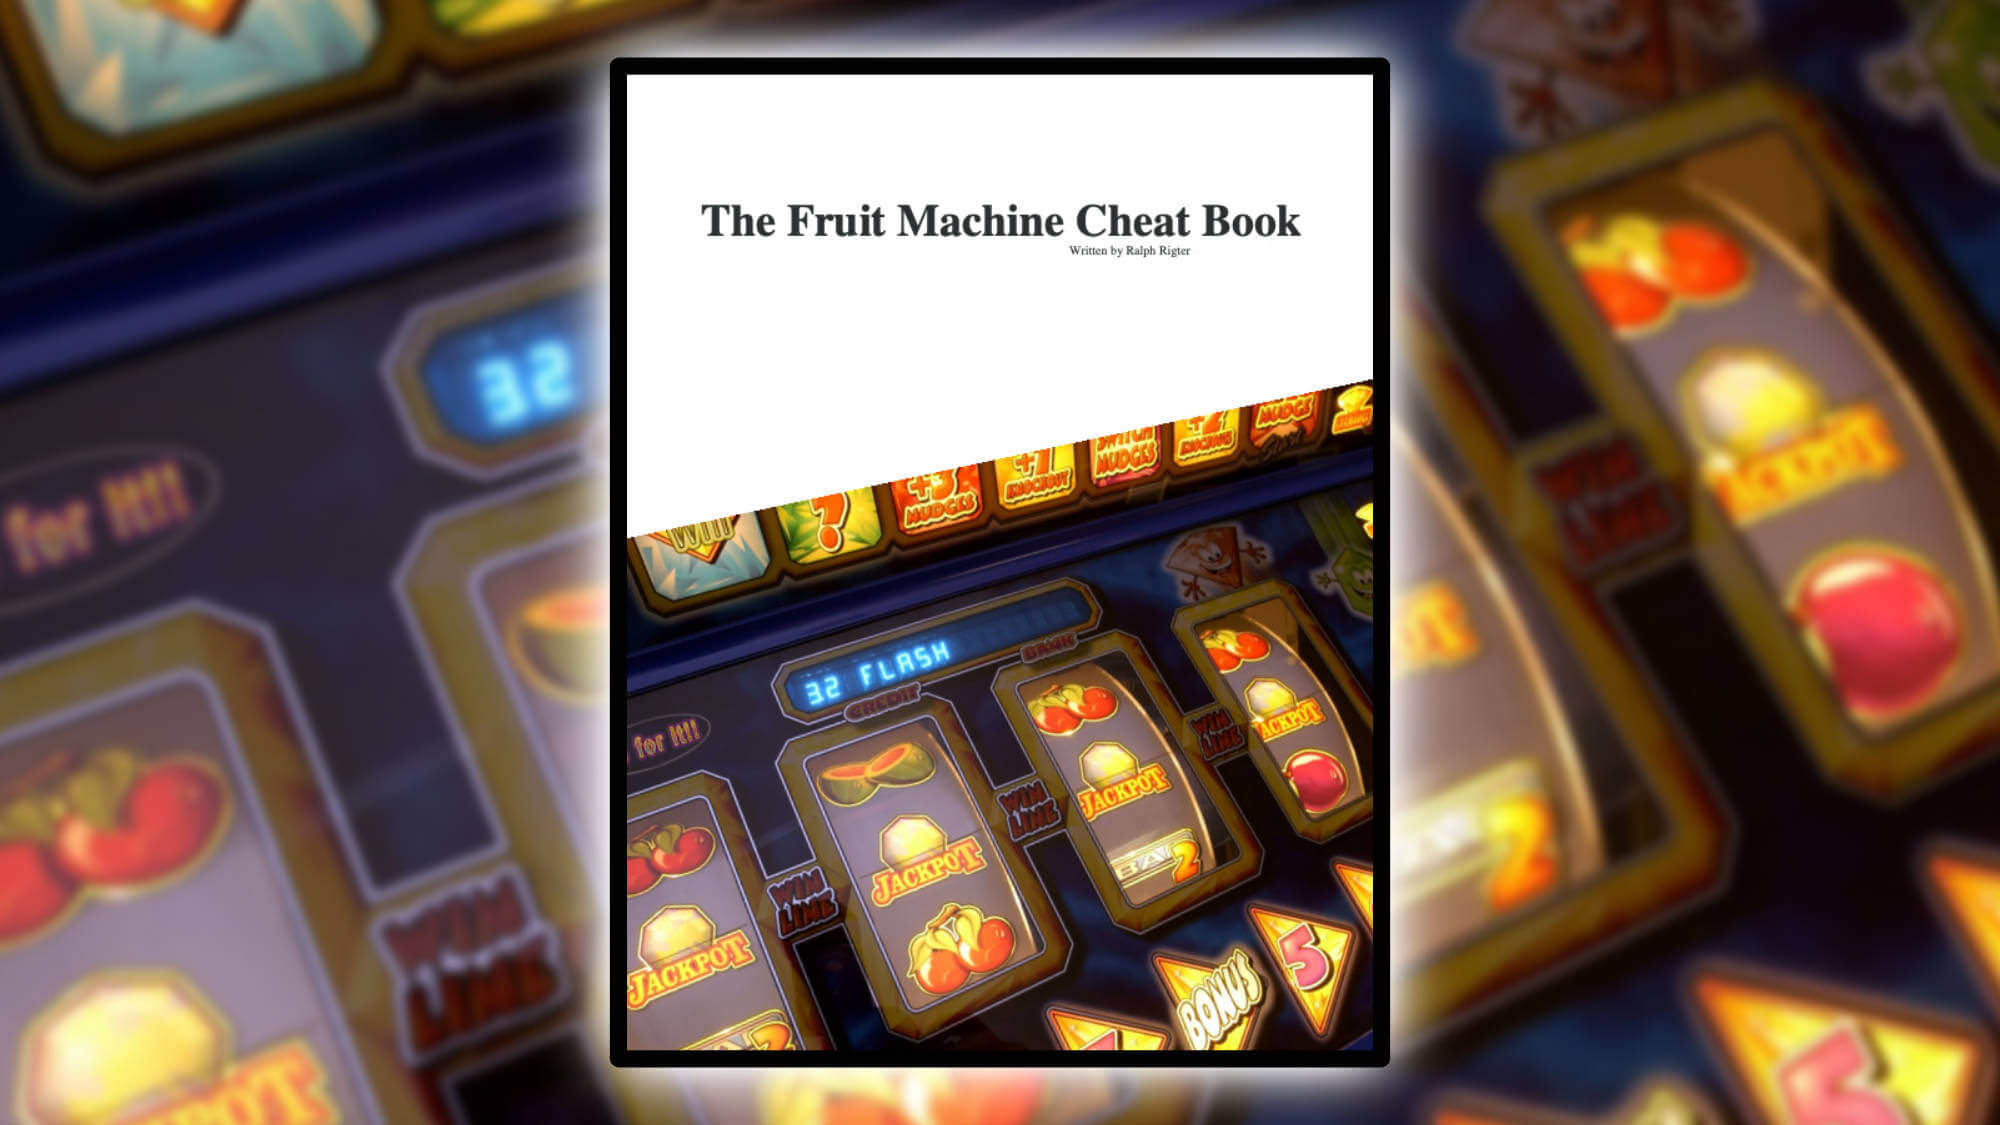 The Fruit Machine Cheat Book